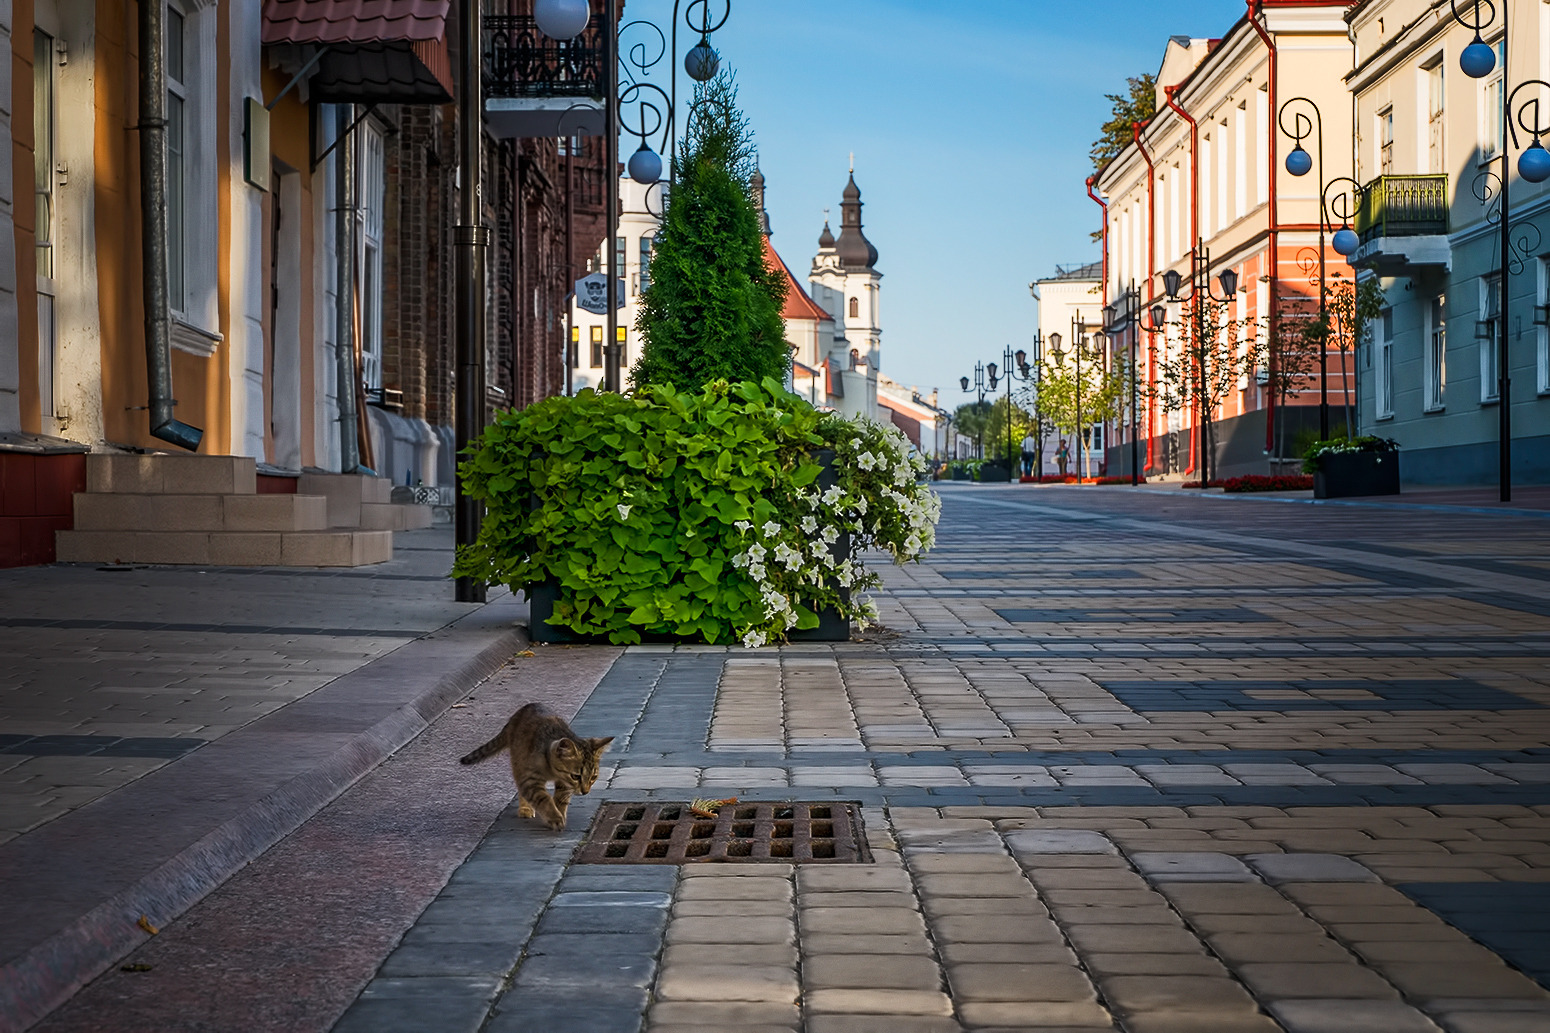 Улица провинциального городка | Фотограф Александр Шатохин | foto.by фото.бай